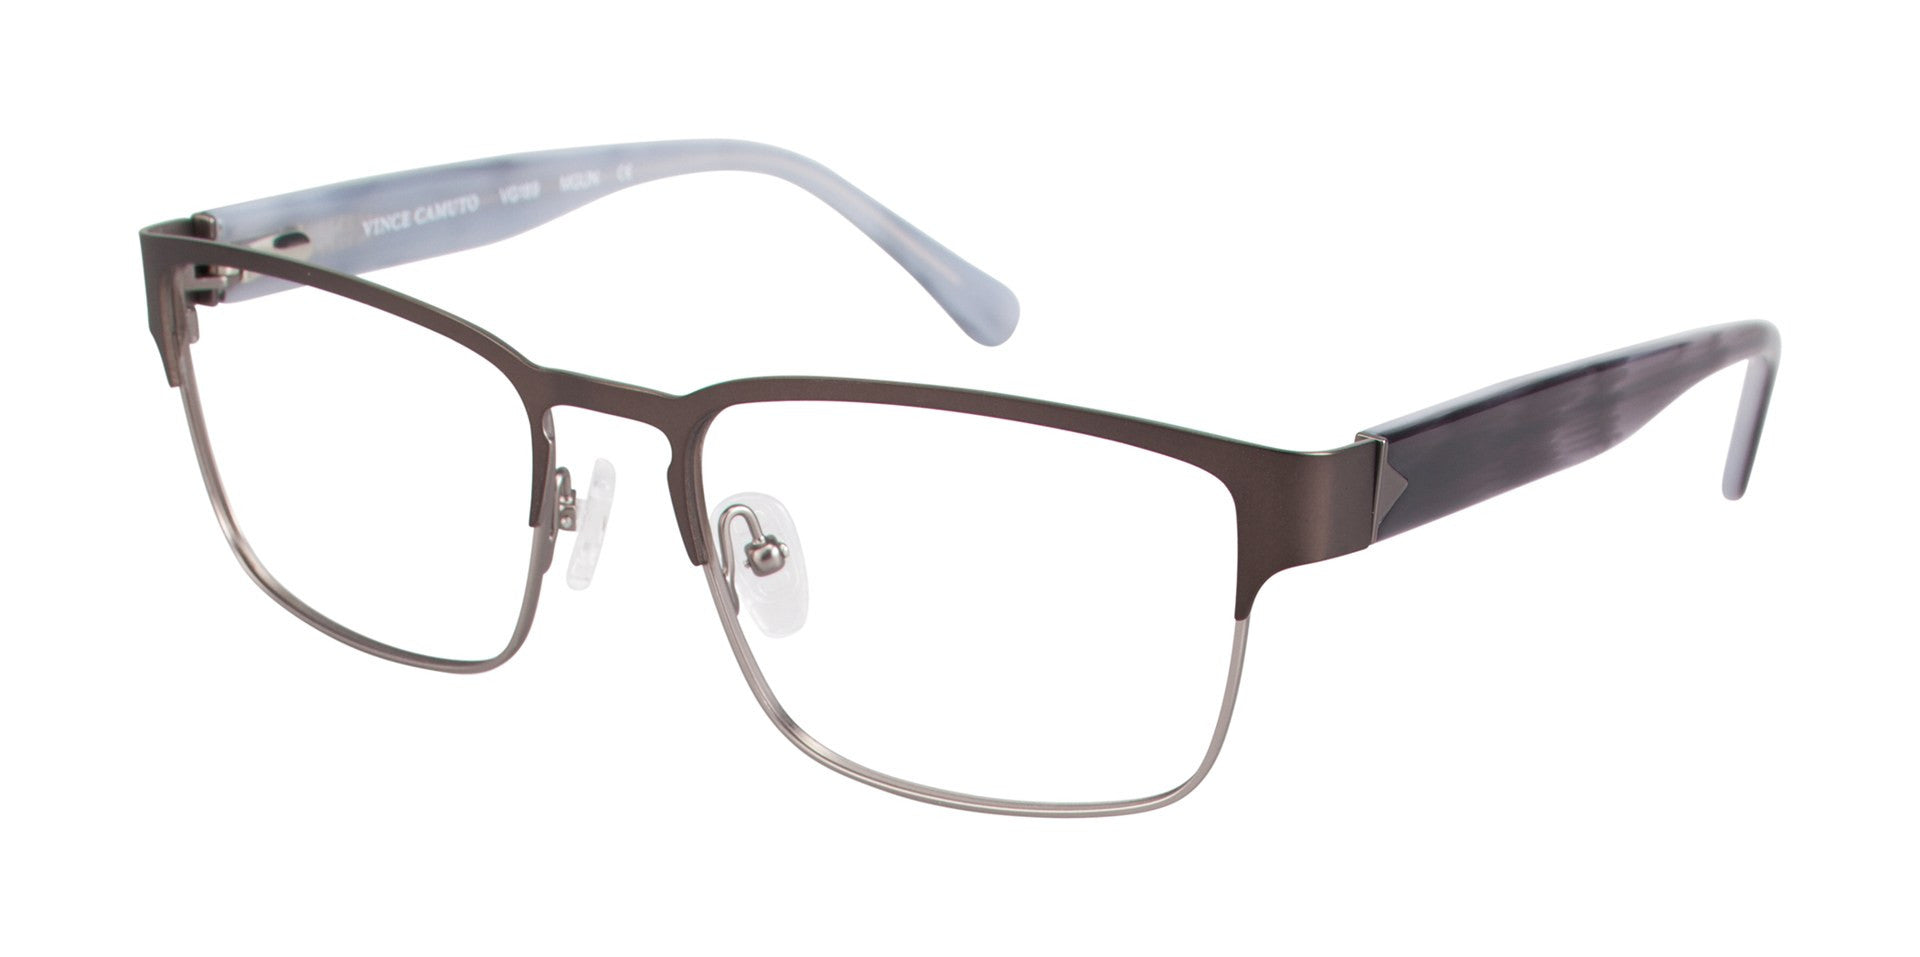 Vince Camuto Eyeglasses VG189 - Go-Readers.com